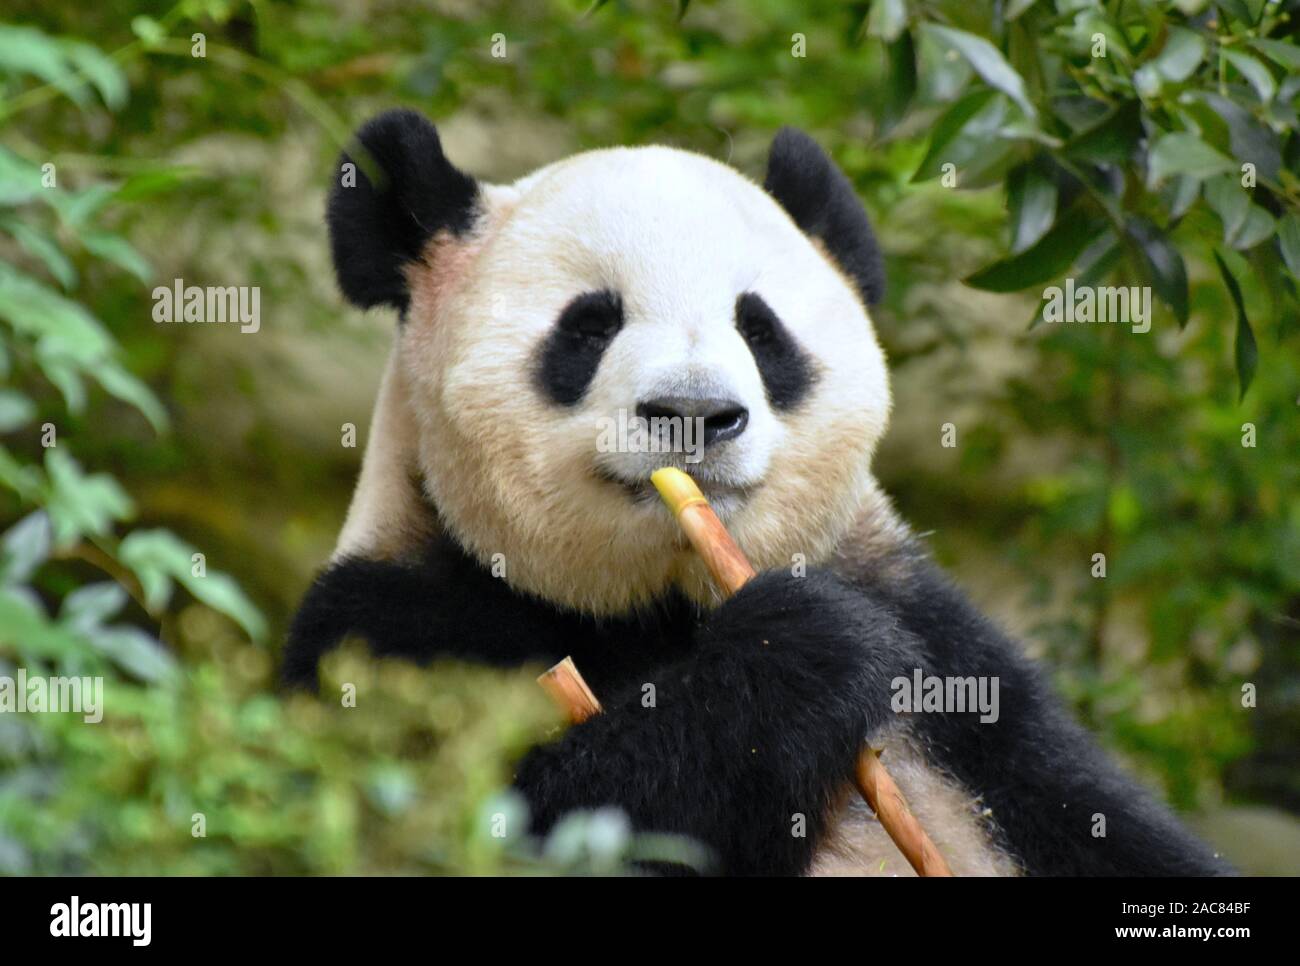 Cute panda eating bamboo close up Banque D'Images